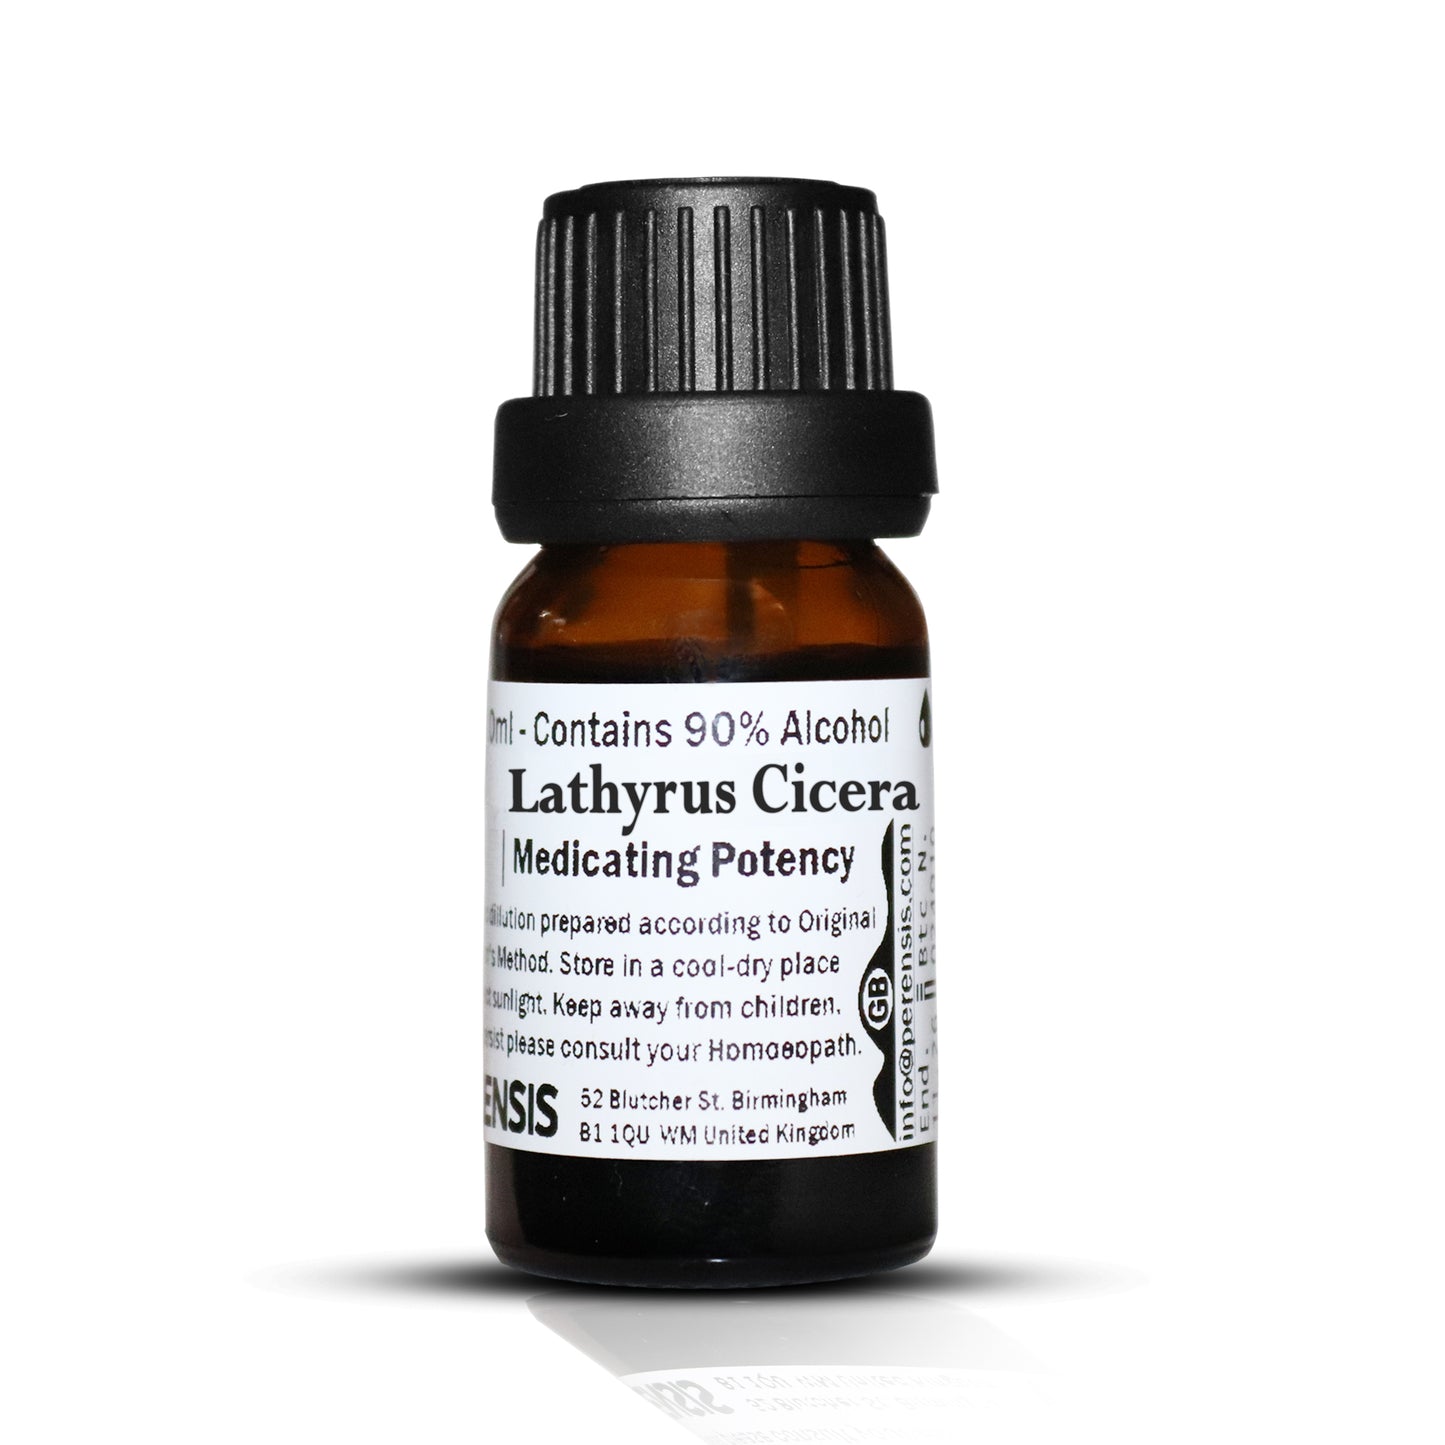 Lathyrus Cicera